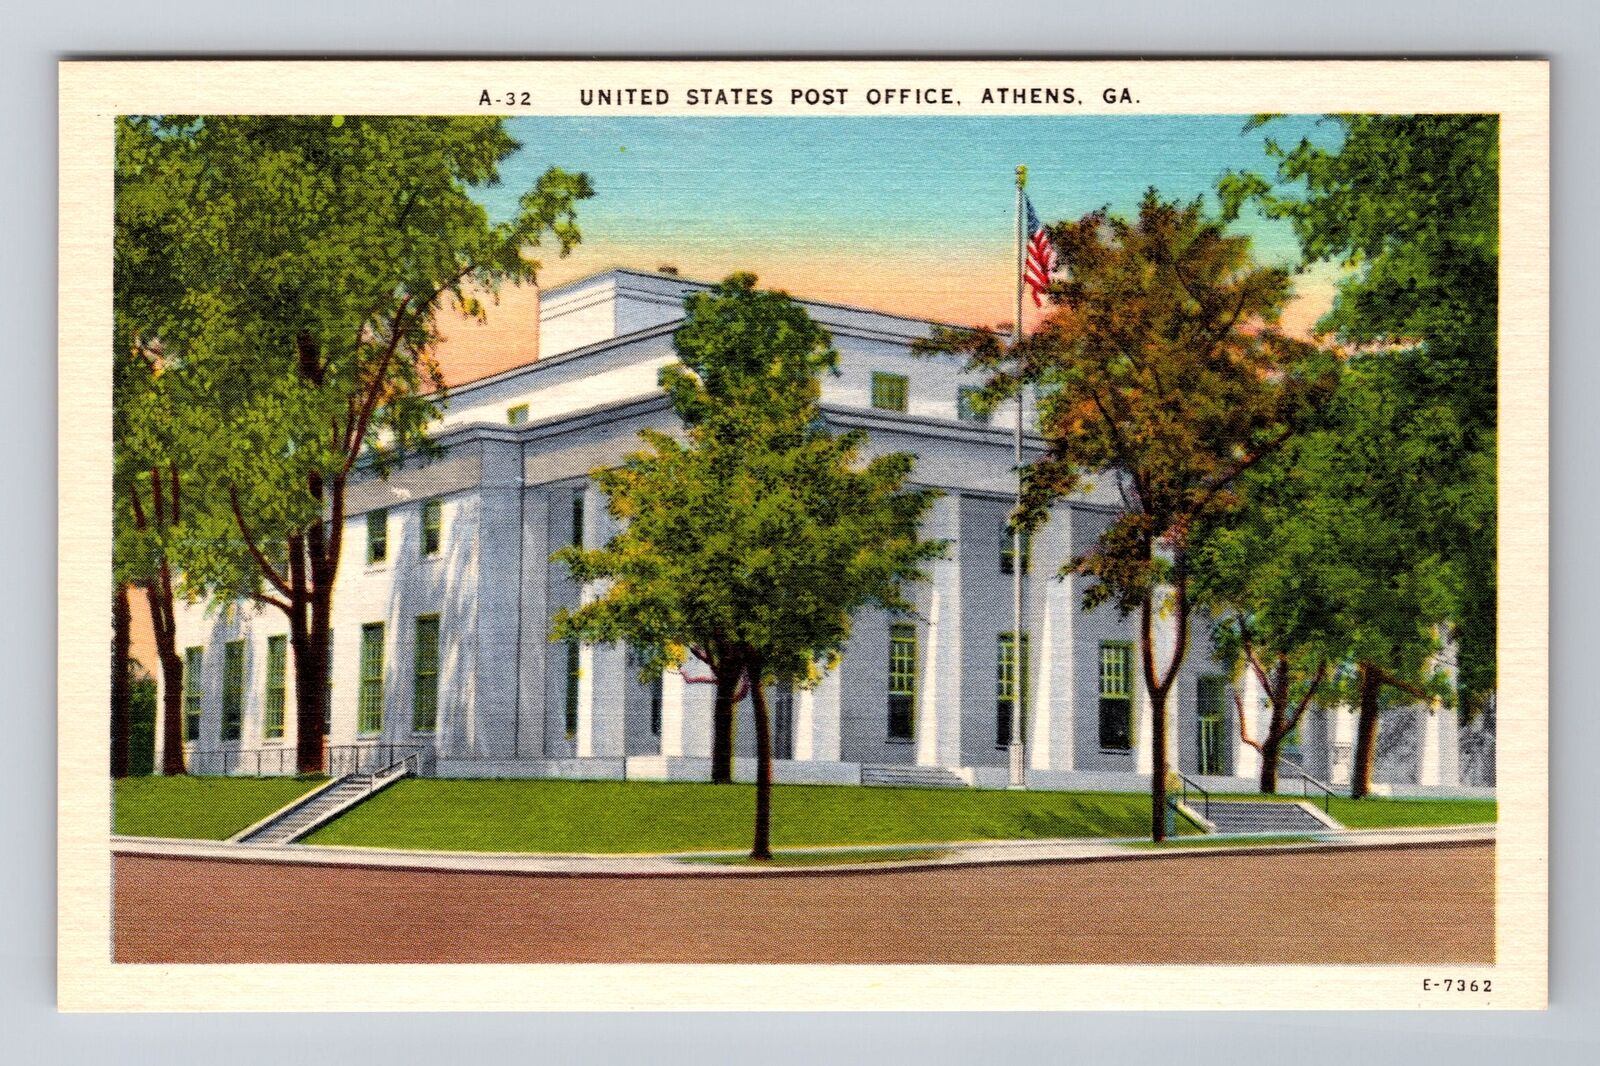 Athens GA-Georgia, United States Post Office, Antique, Vintage Postcard